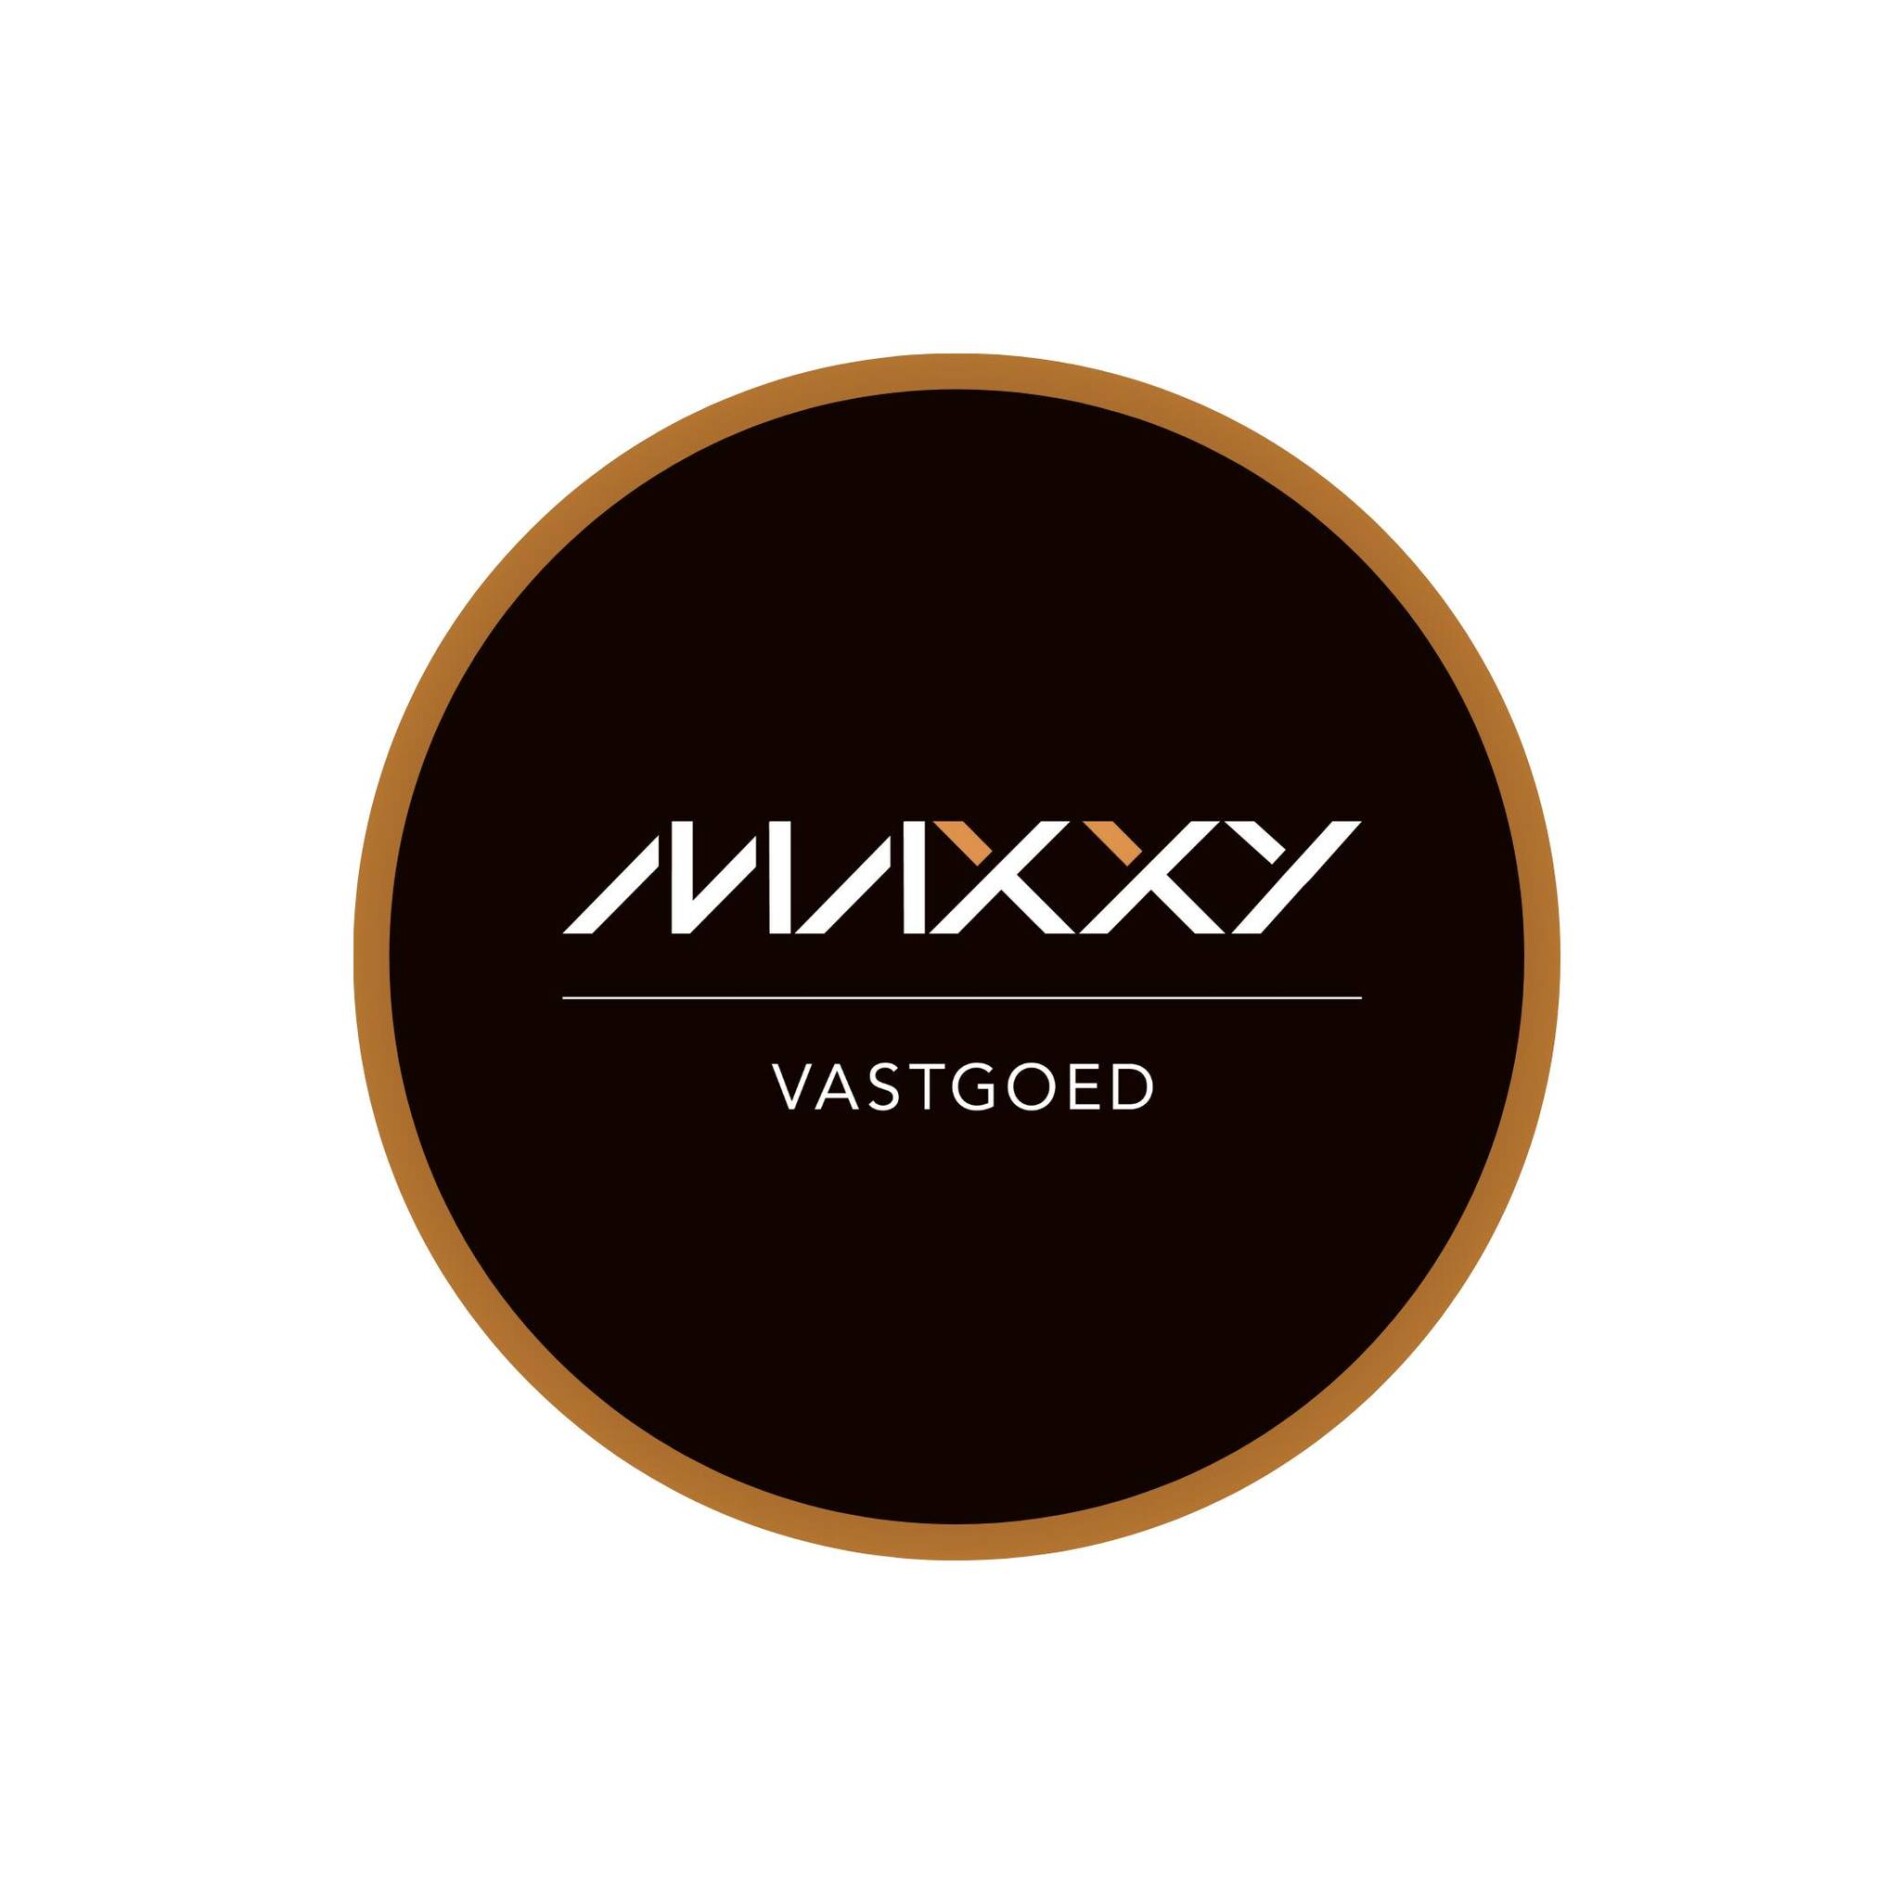 Logo van Maxxy vastgoed